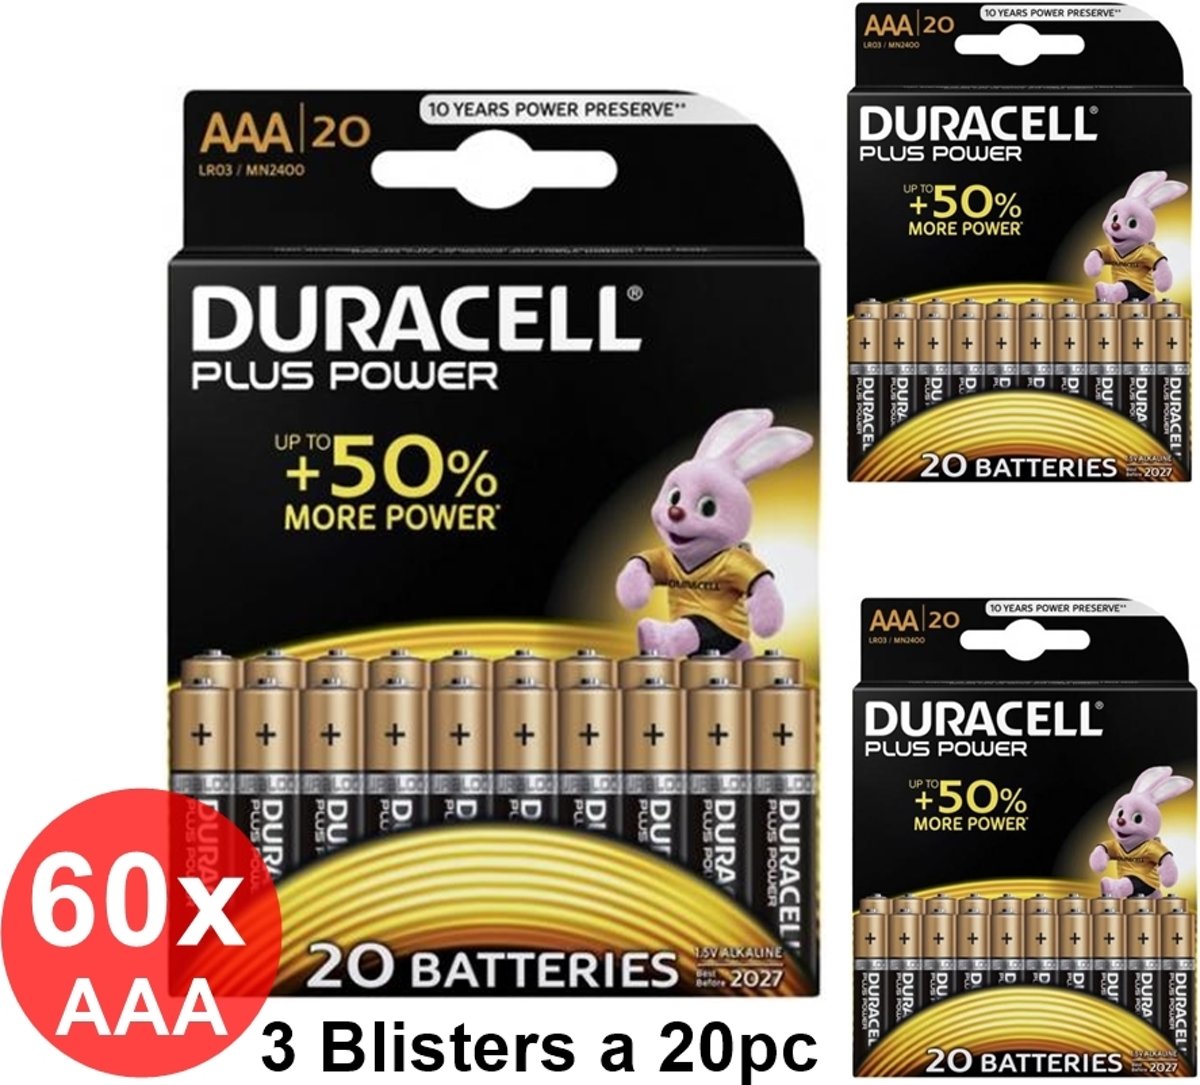 60 Stuks - Duracell LR03 / AAA / R03 / MN 2400 1.5V alkaline batterij